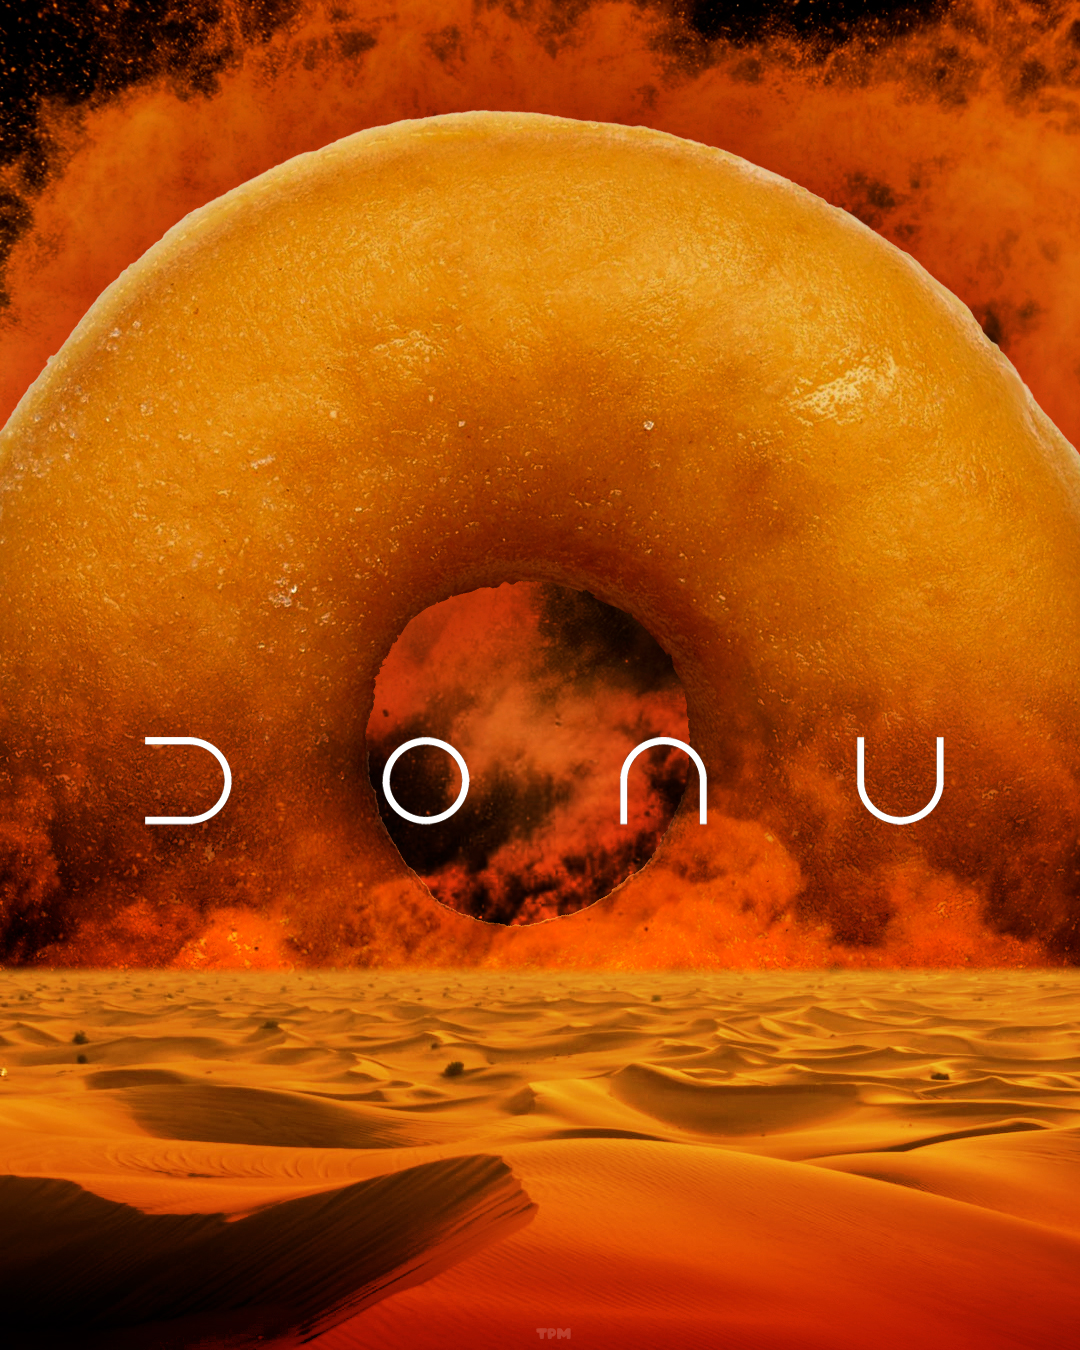 Donut gigante en un desierto